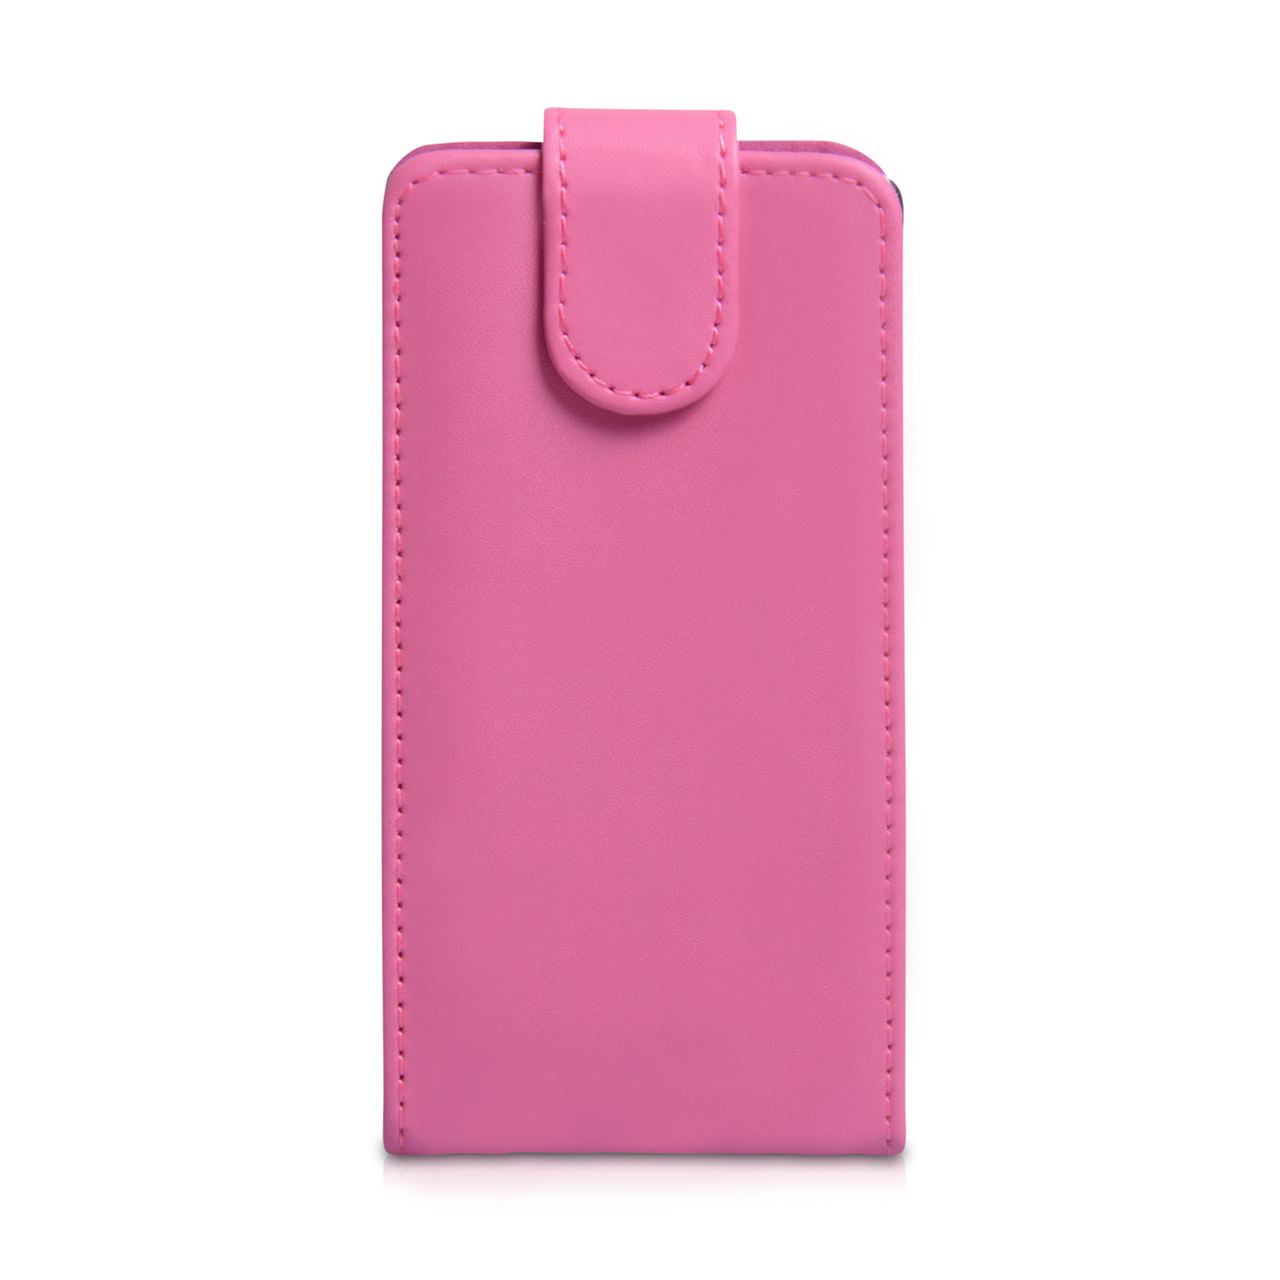 YouSave Nokia Lumia 720 Leather Effect Flip Case - Hot Pink